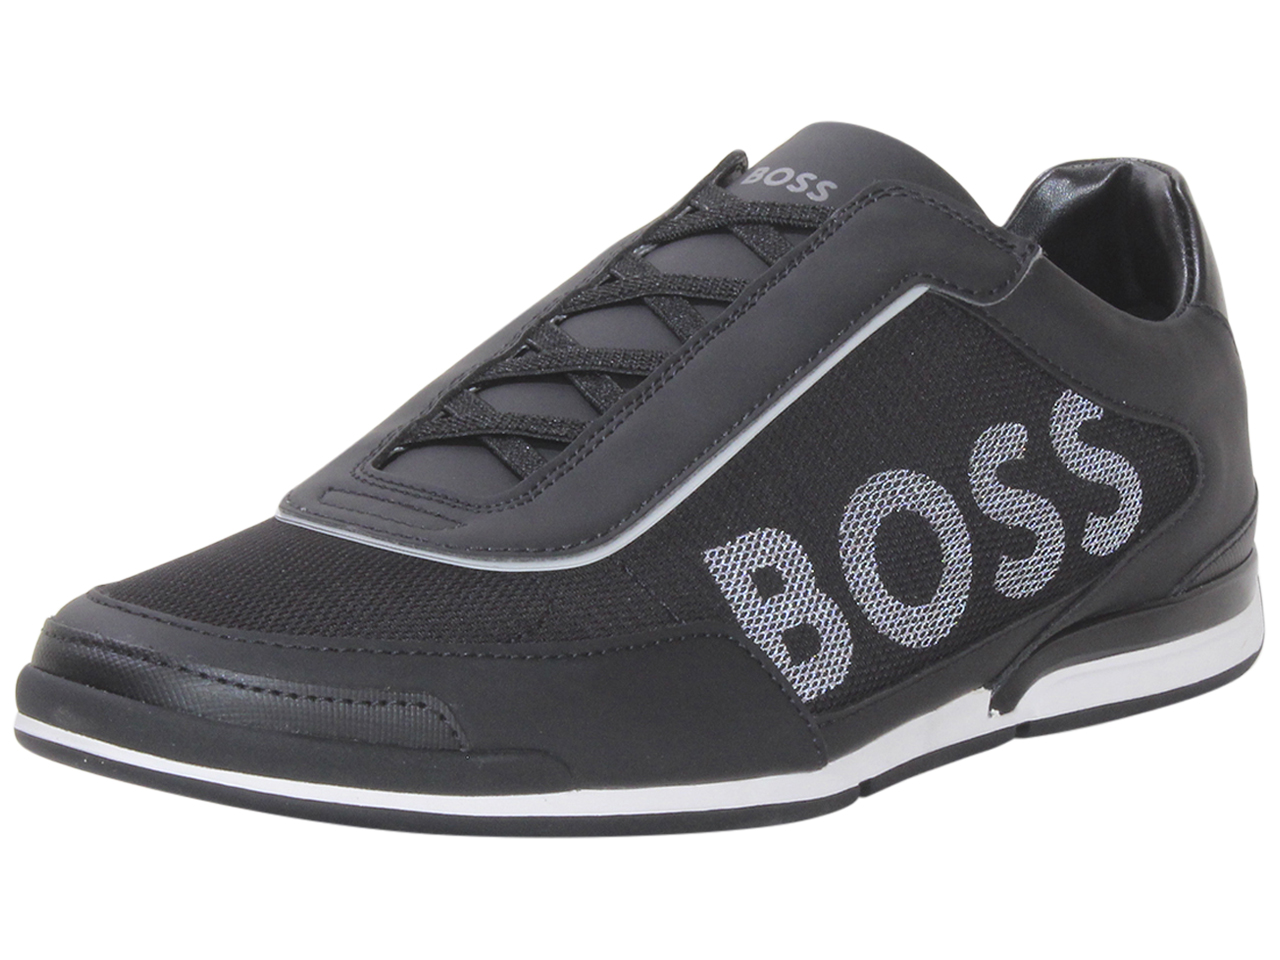 Hugo Boss Men's Saturn Slip On Sneakers Low Top Shoes Laceless Black Sz ...